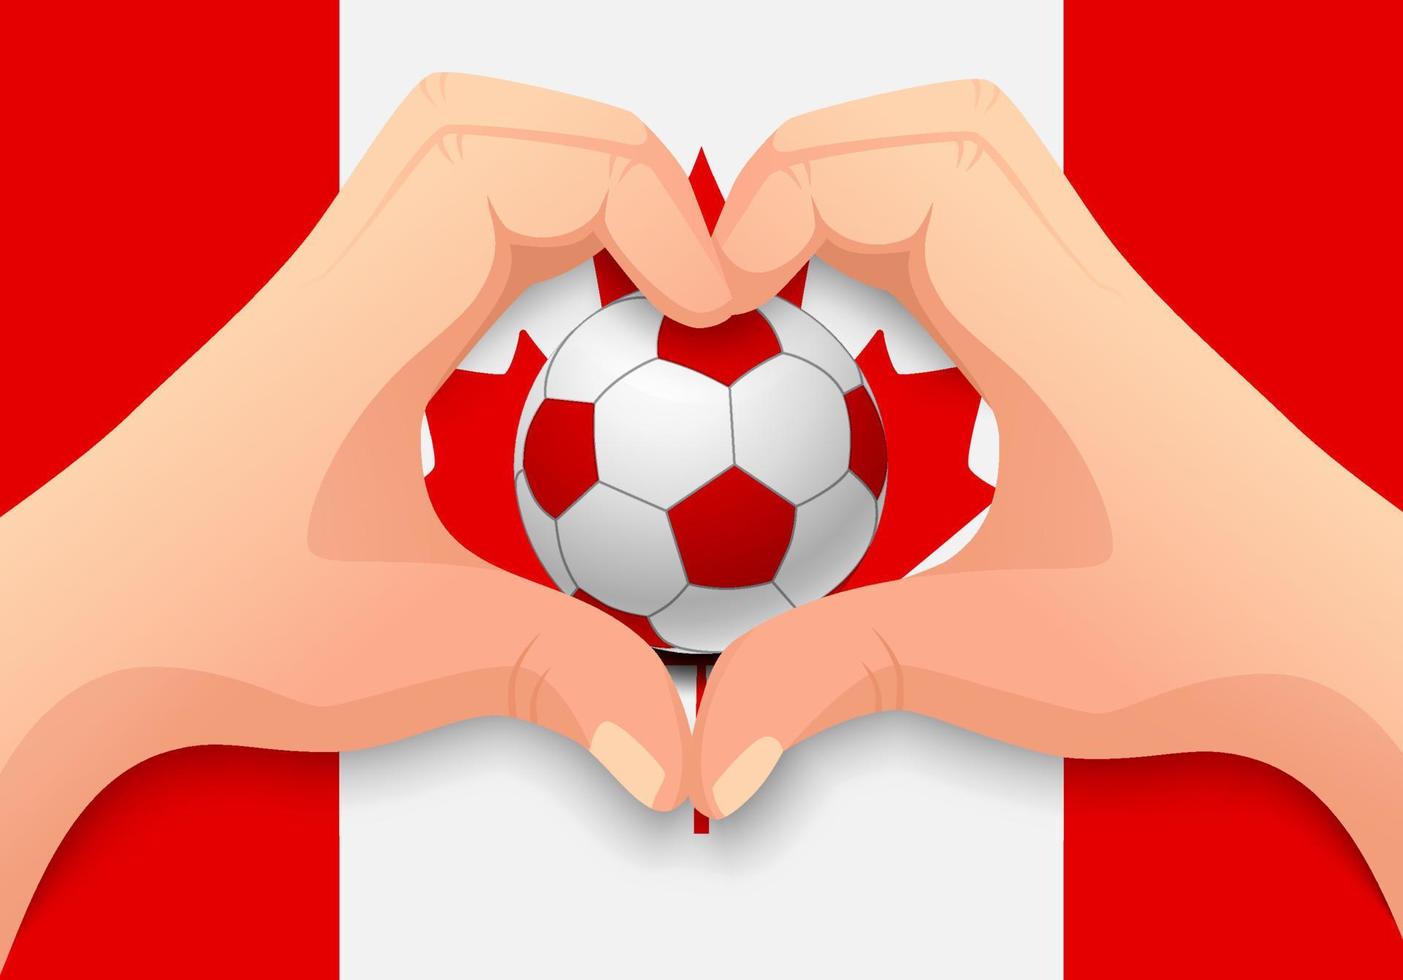 Canada soccer ball and hand heart shape vector